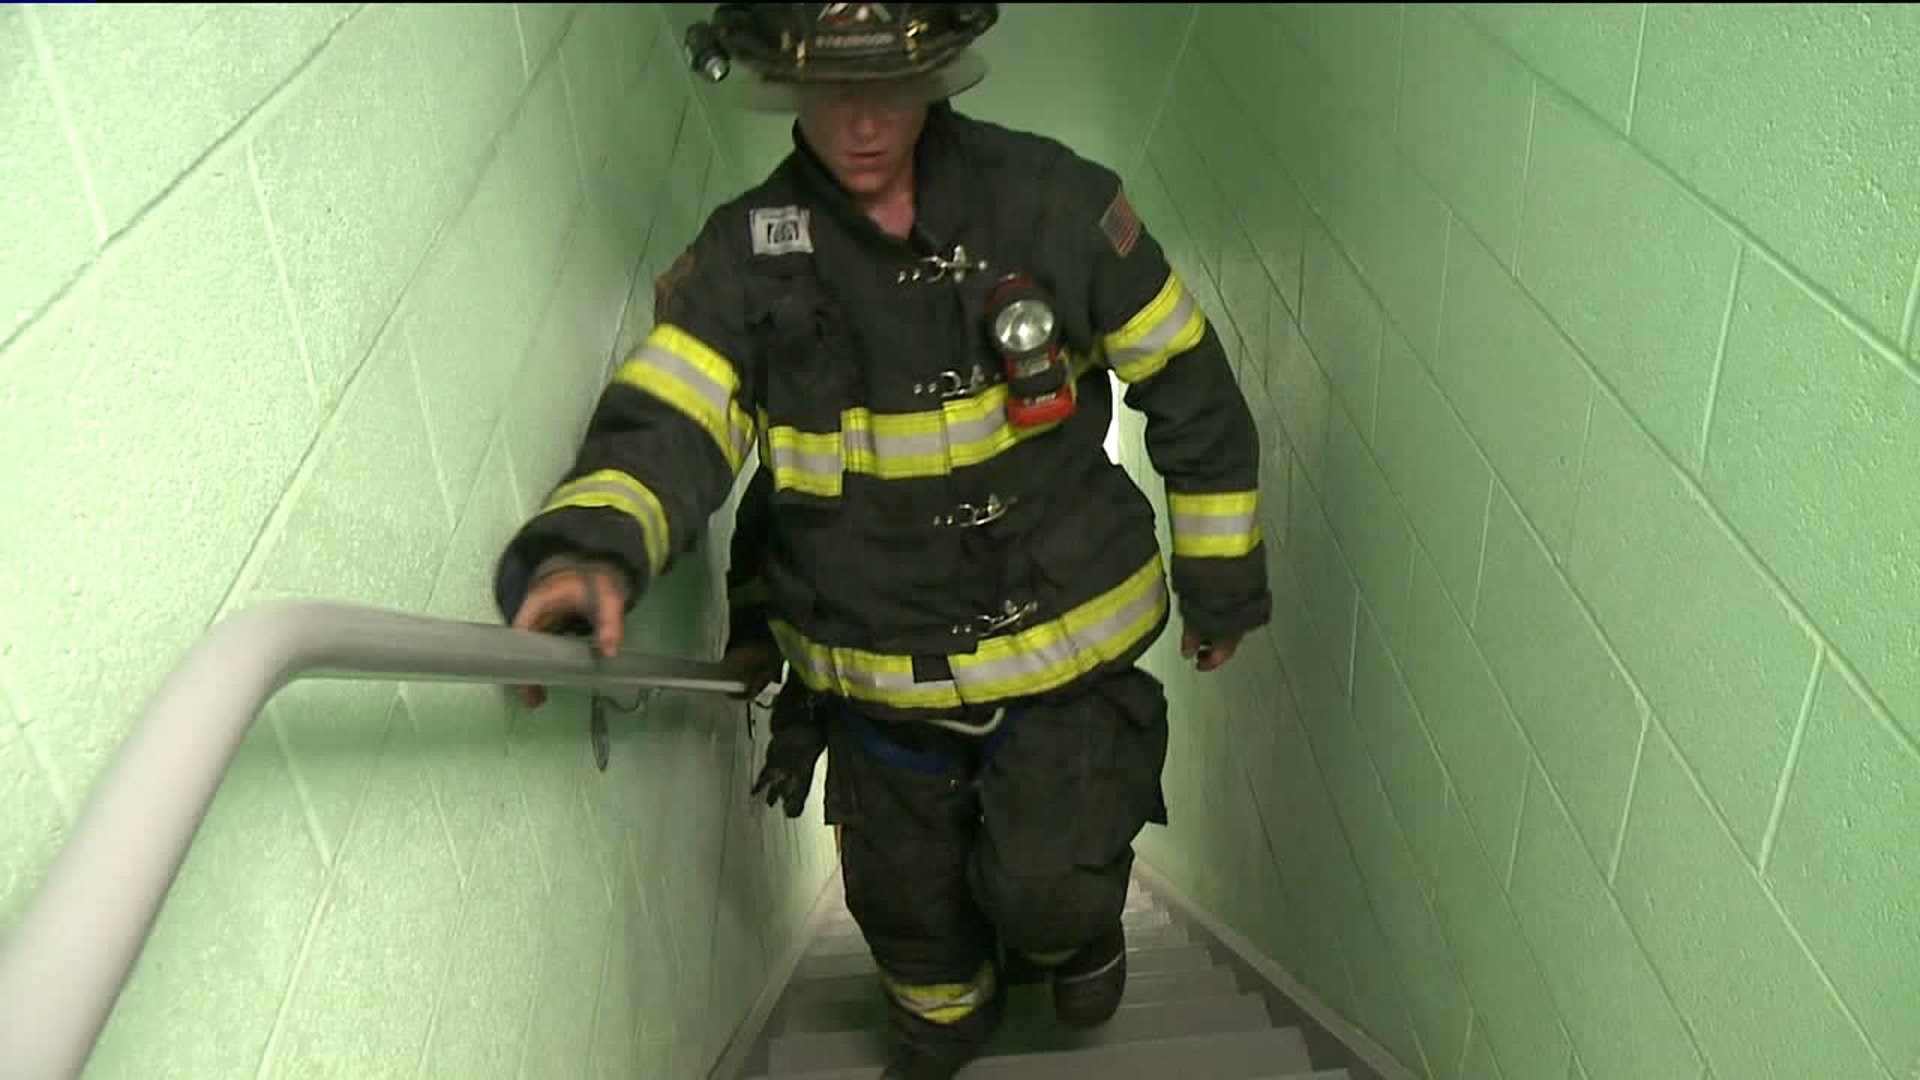 Grueling Stair Climb Honors Fallen Firefighters